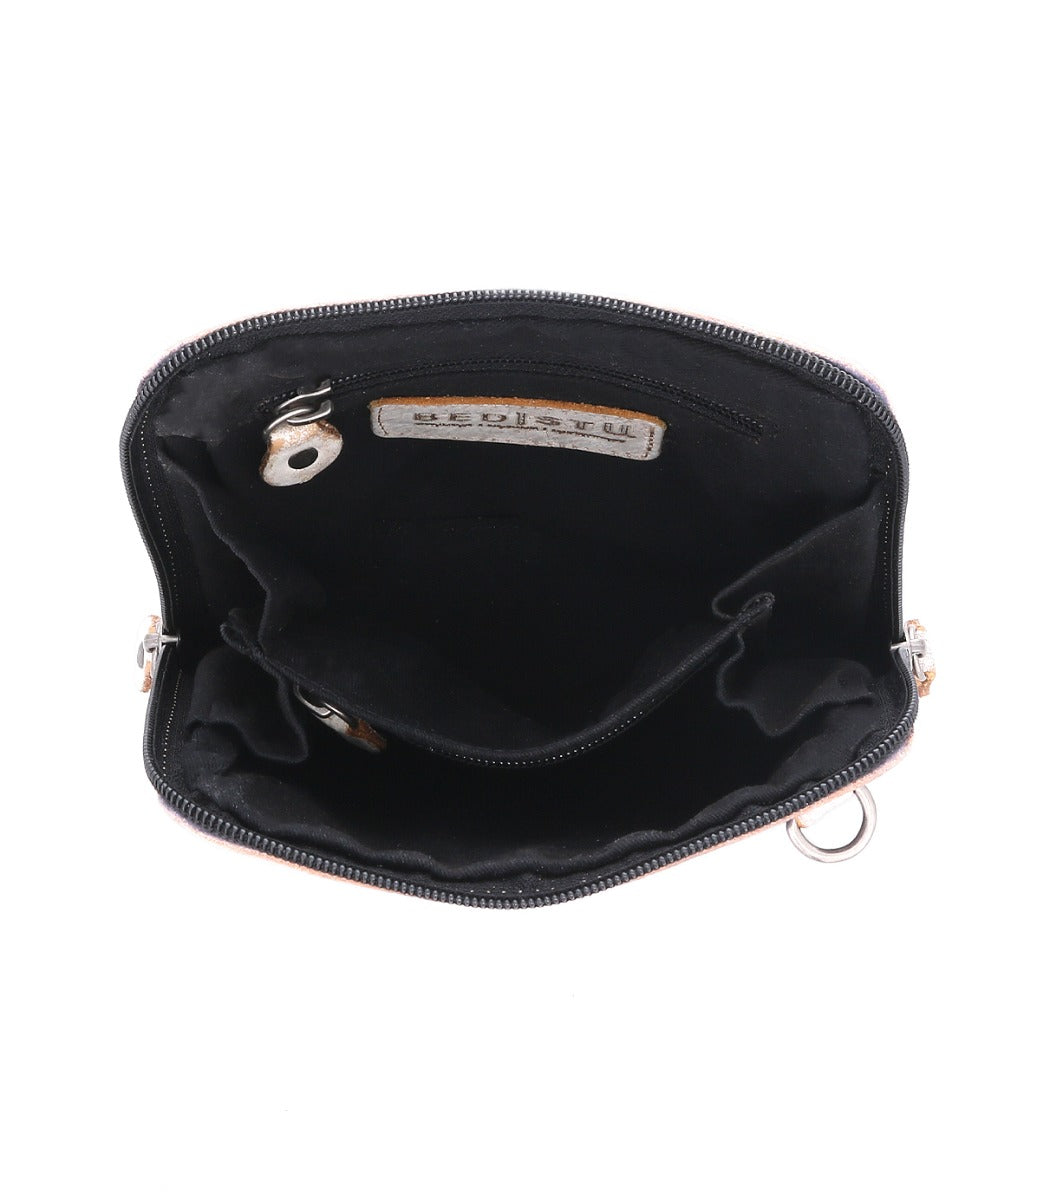 The inside of a Ventura black purse with a zipper from Bed Stu.